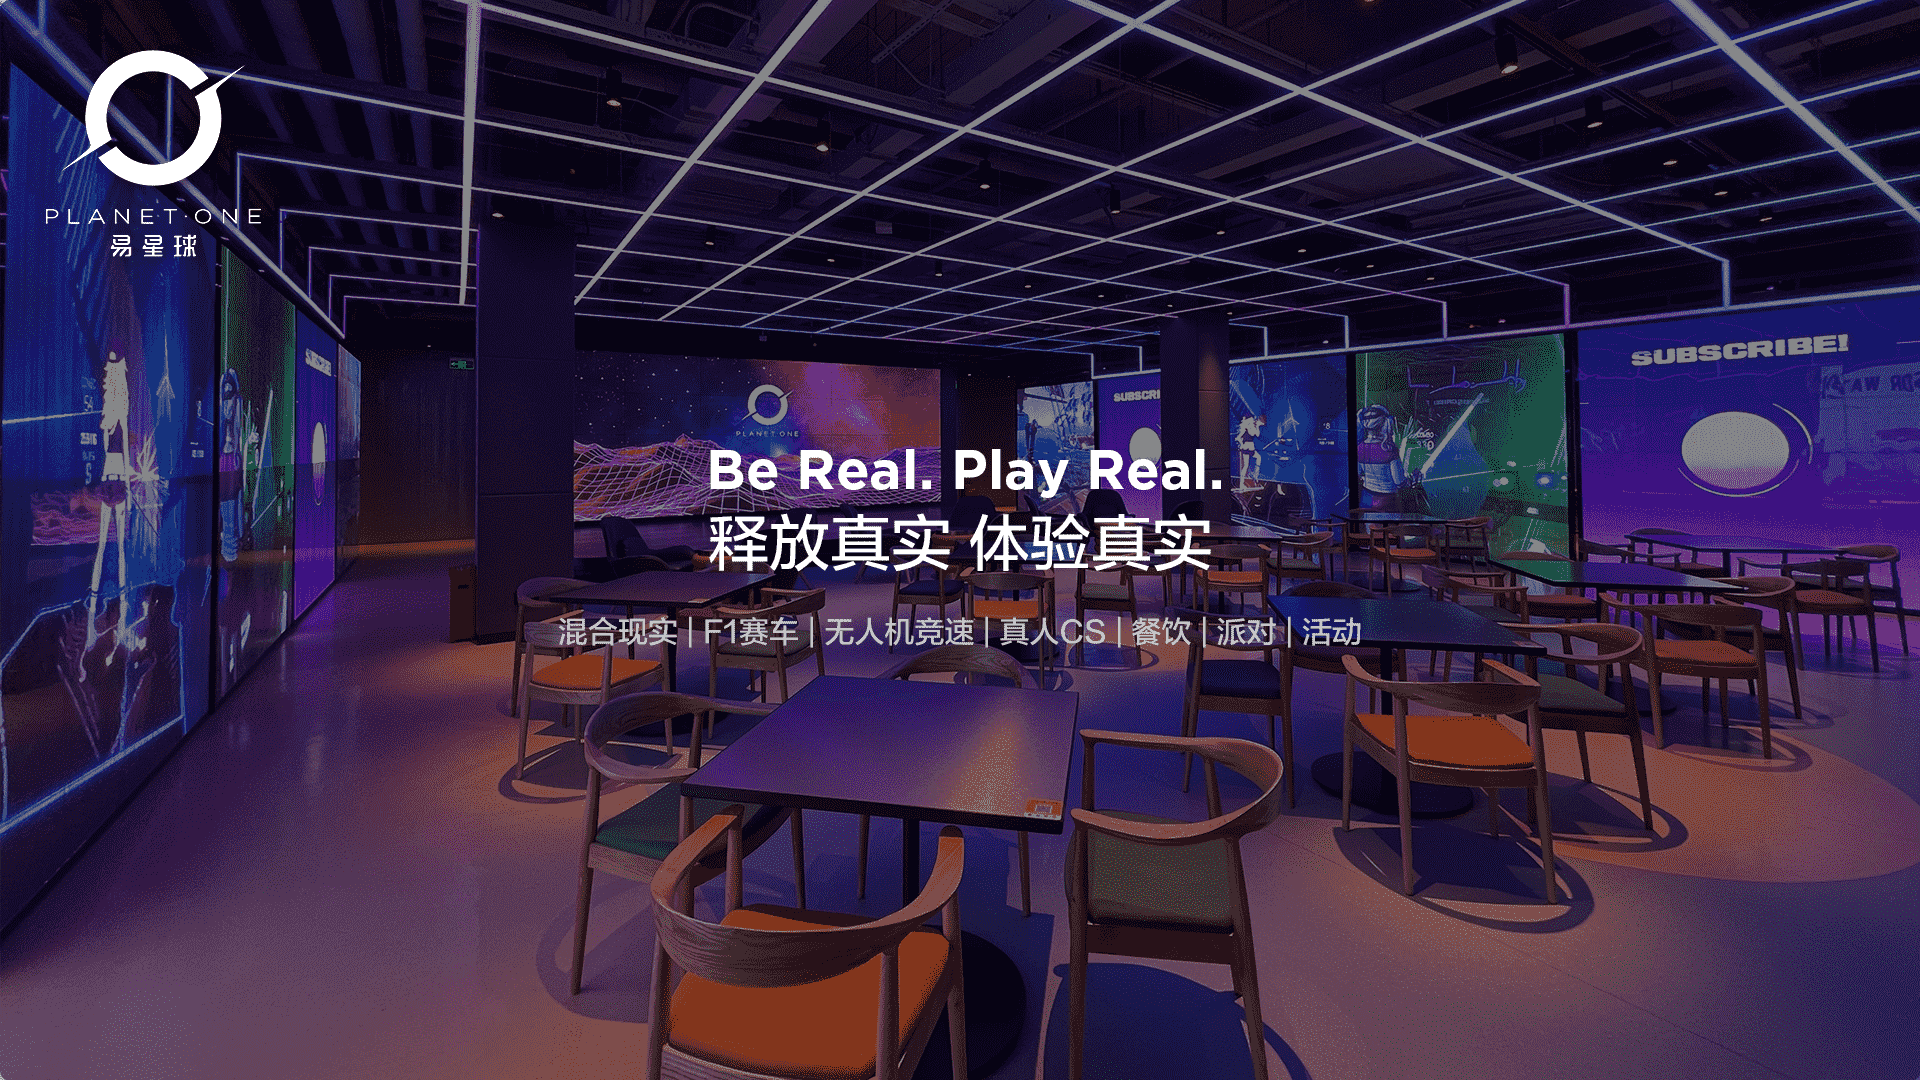 Planet O旗下首家旗舰娱乐中心「Planet One易星球」将于6月5日在上海盛大开业